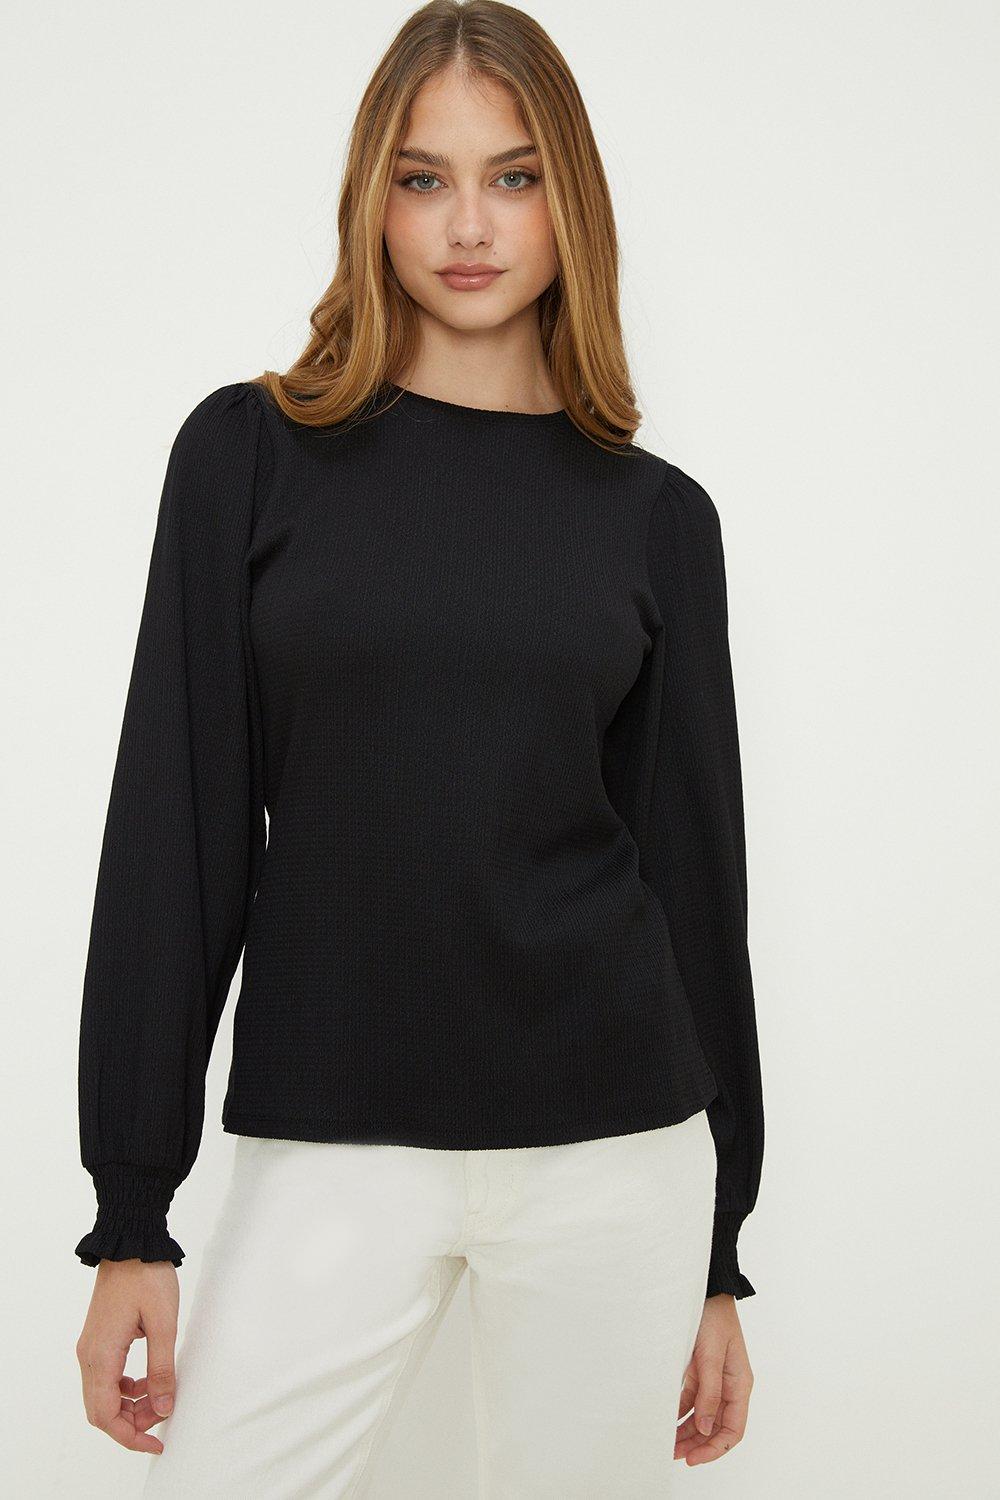 Women’s Shirred Cuff Long Sleeve Top - black - M